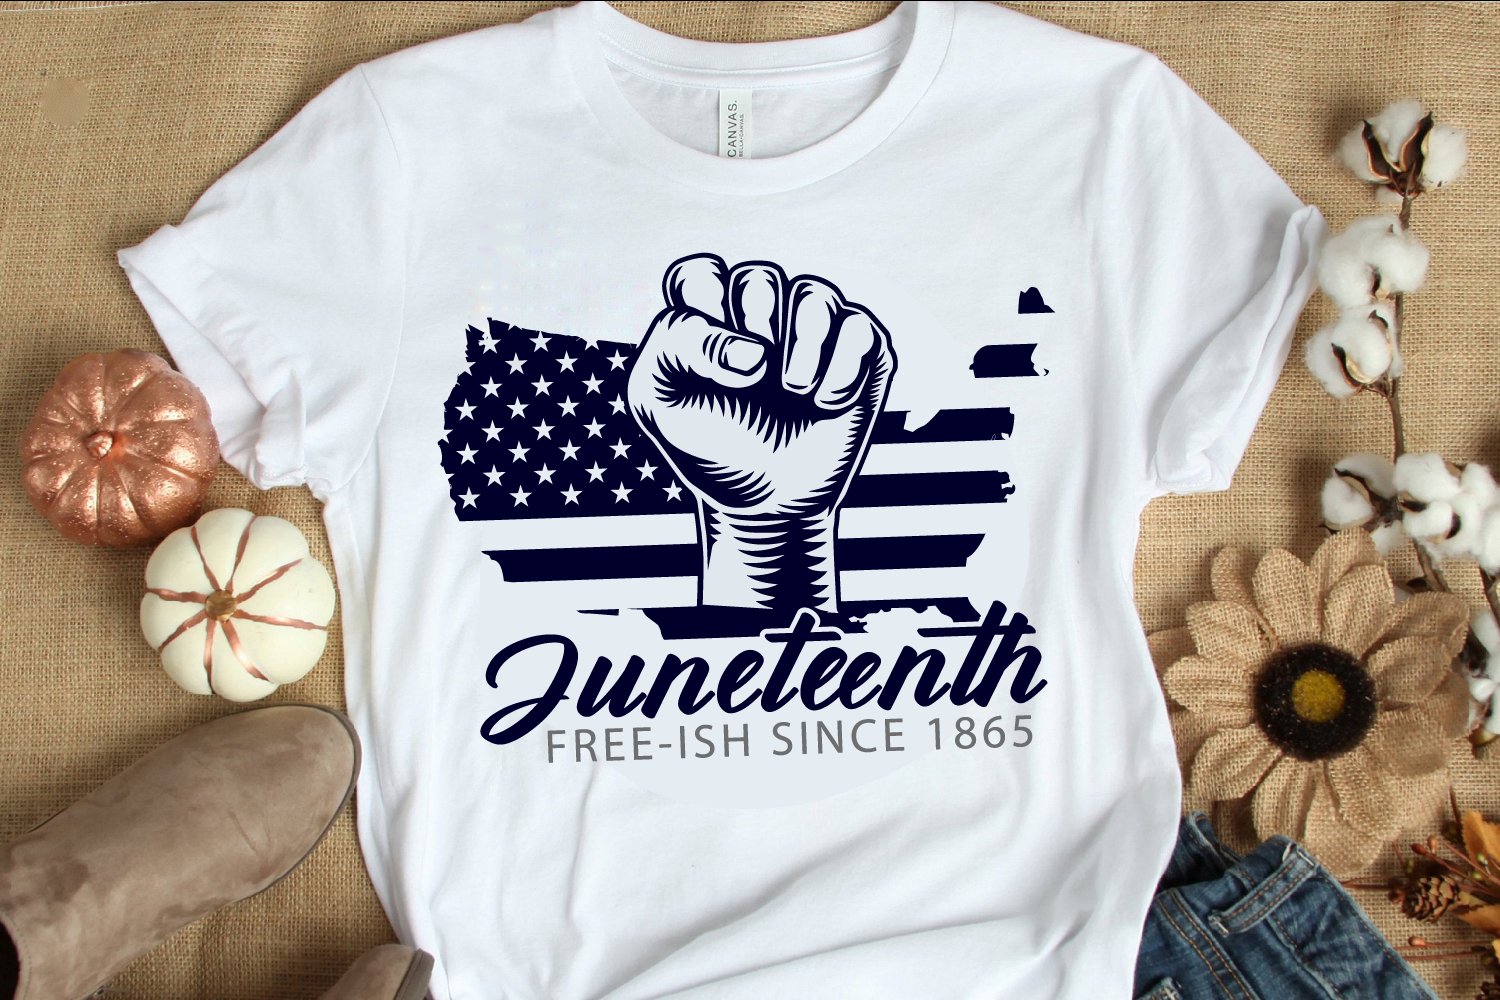 Juneteenth free-is since 1865.